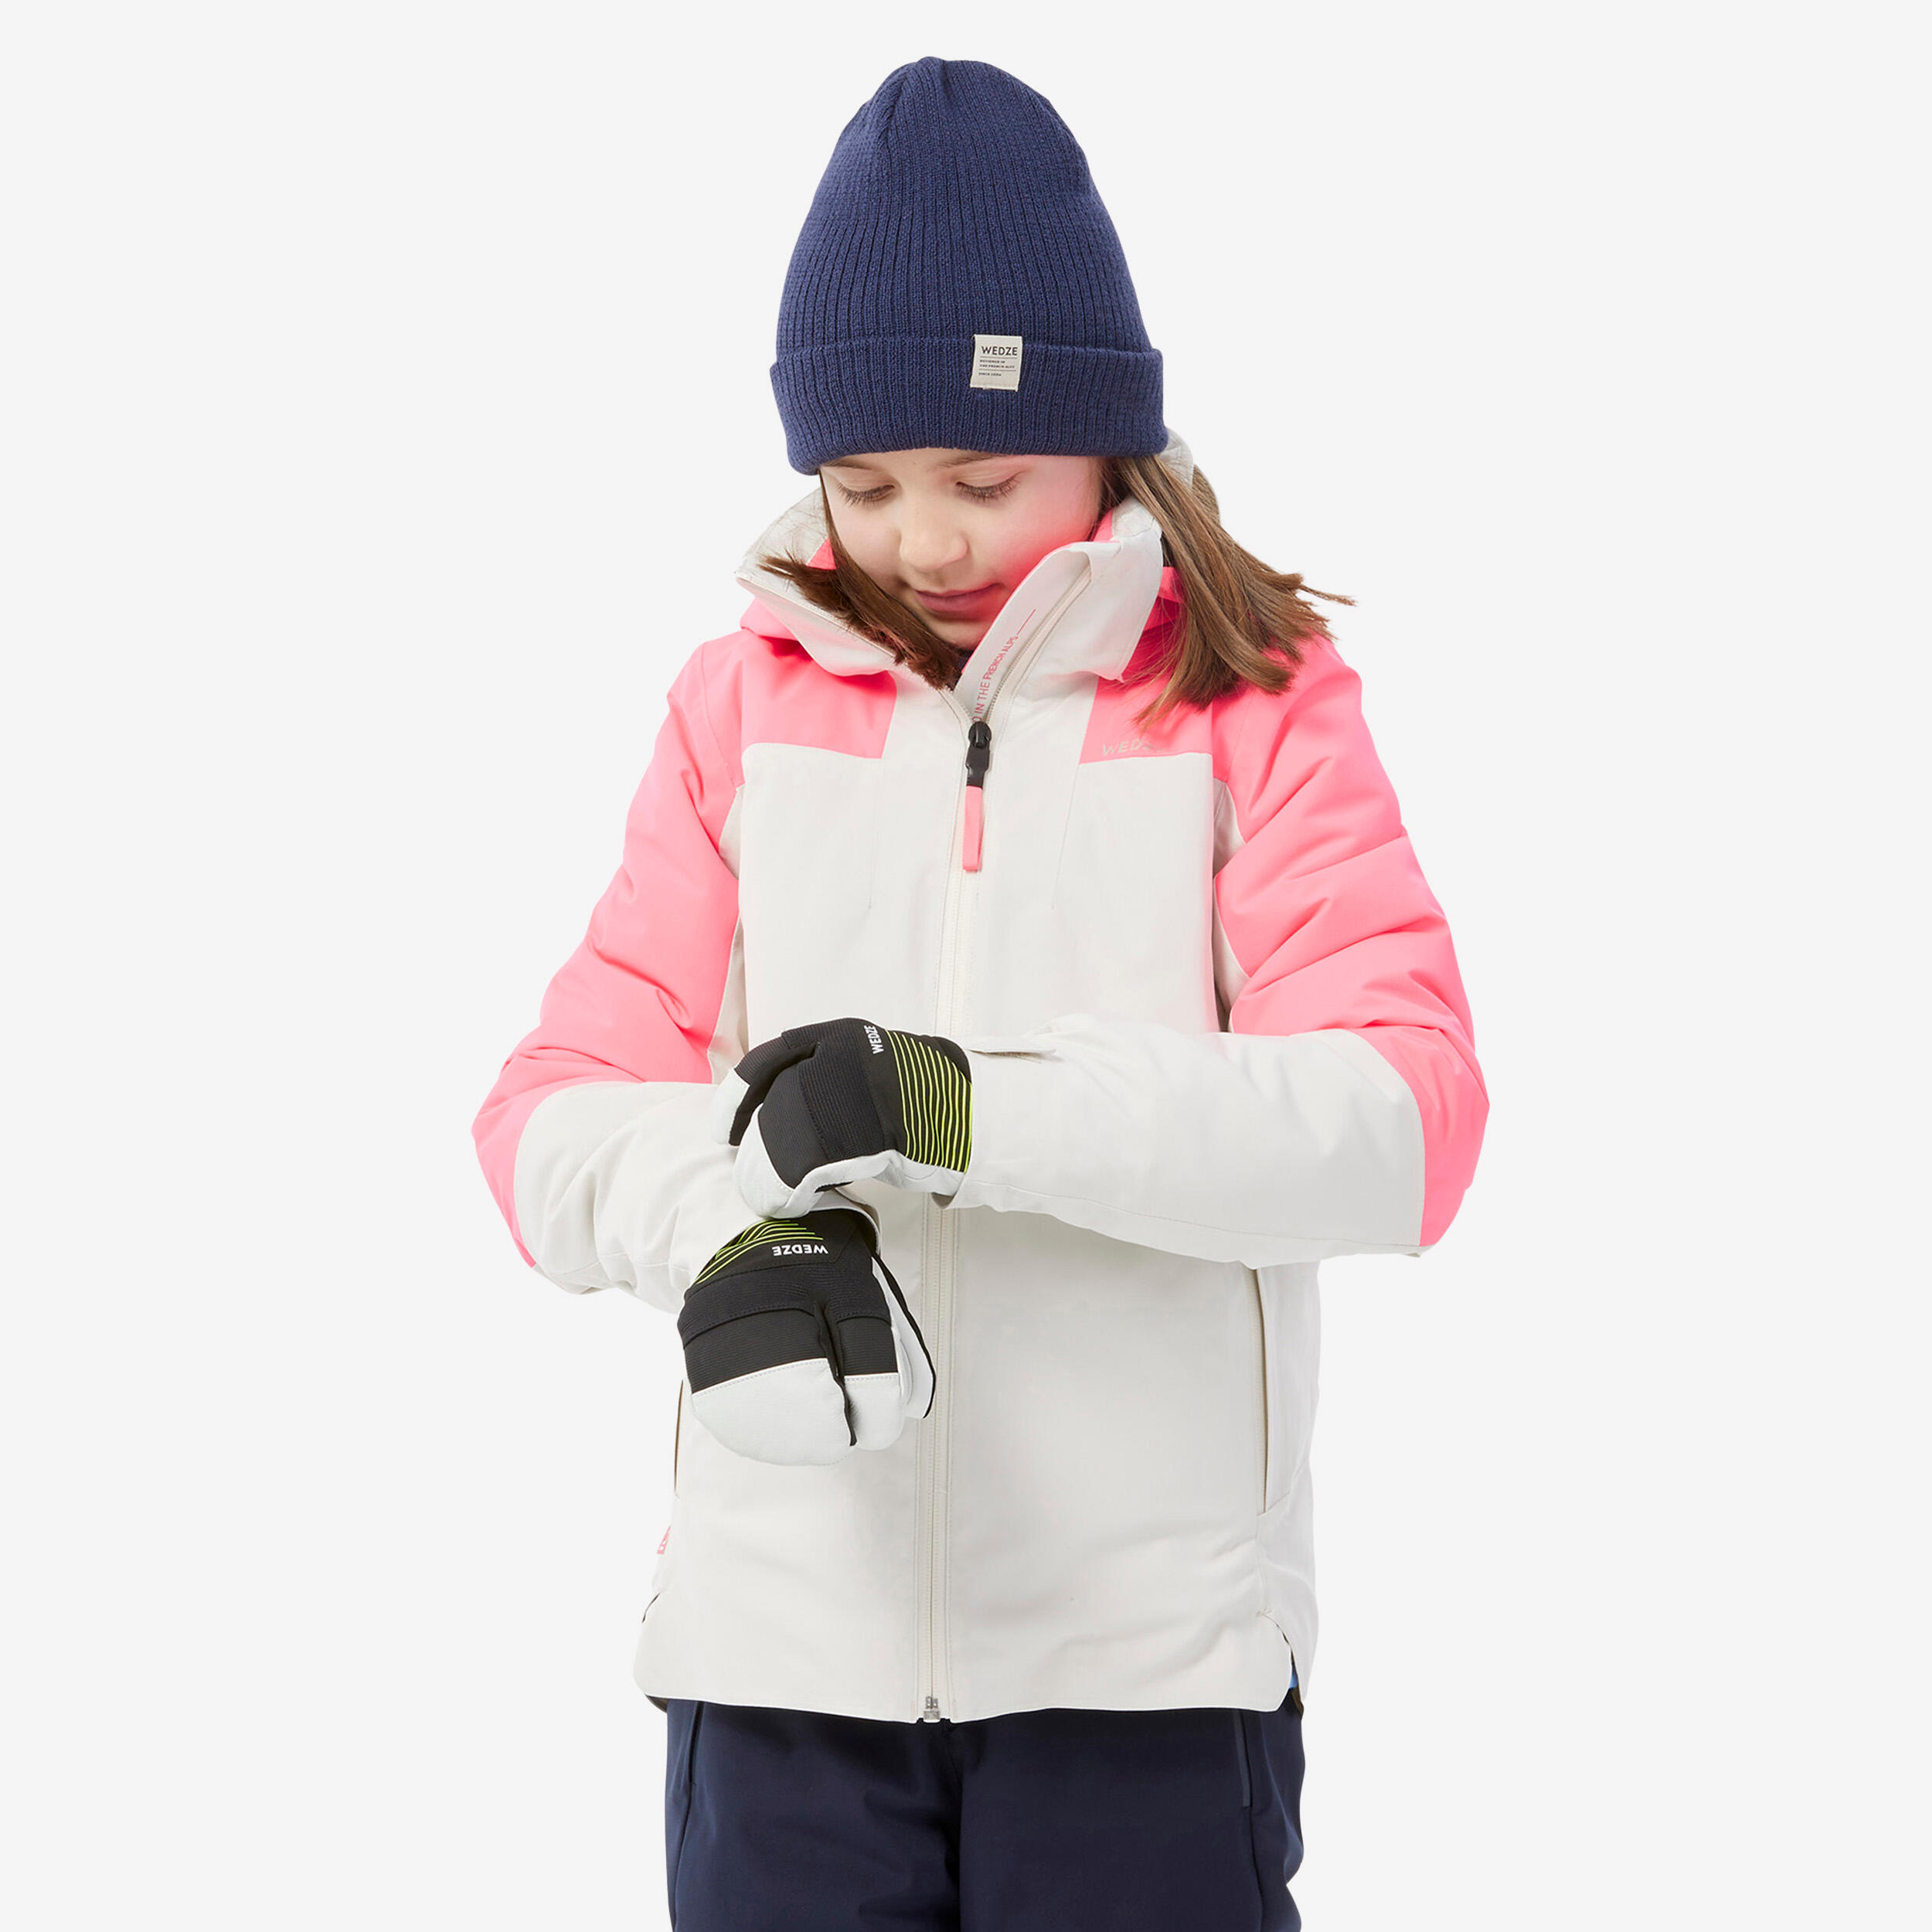 WEDZE Kids’ warm and waterproof ski jacket 900 - White and pink